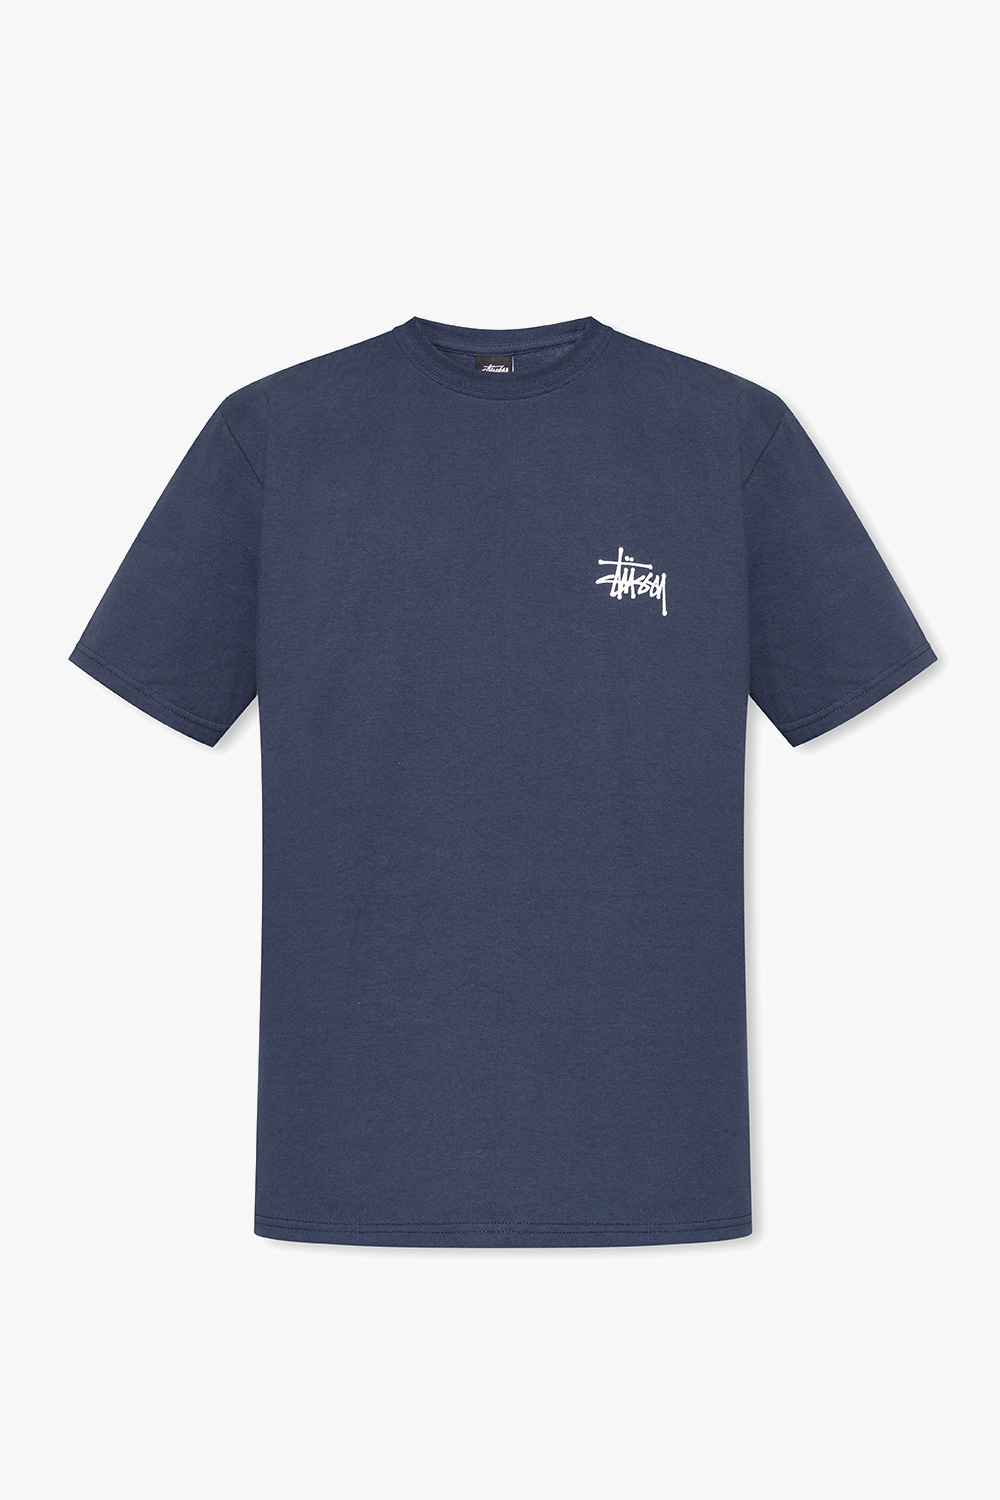 Navy blue Printed T - CamaragrancanariaShops Botswana - shirt